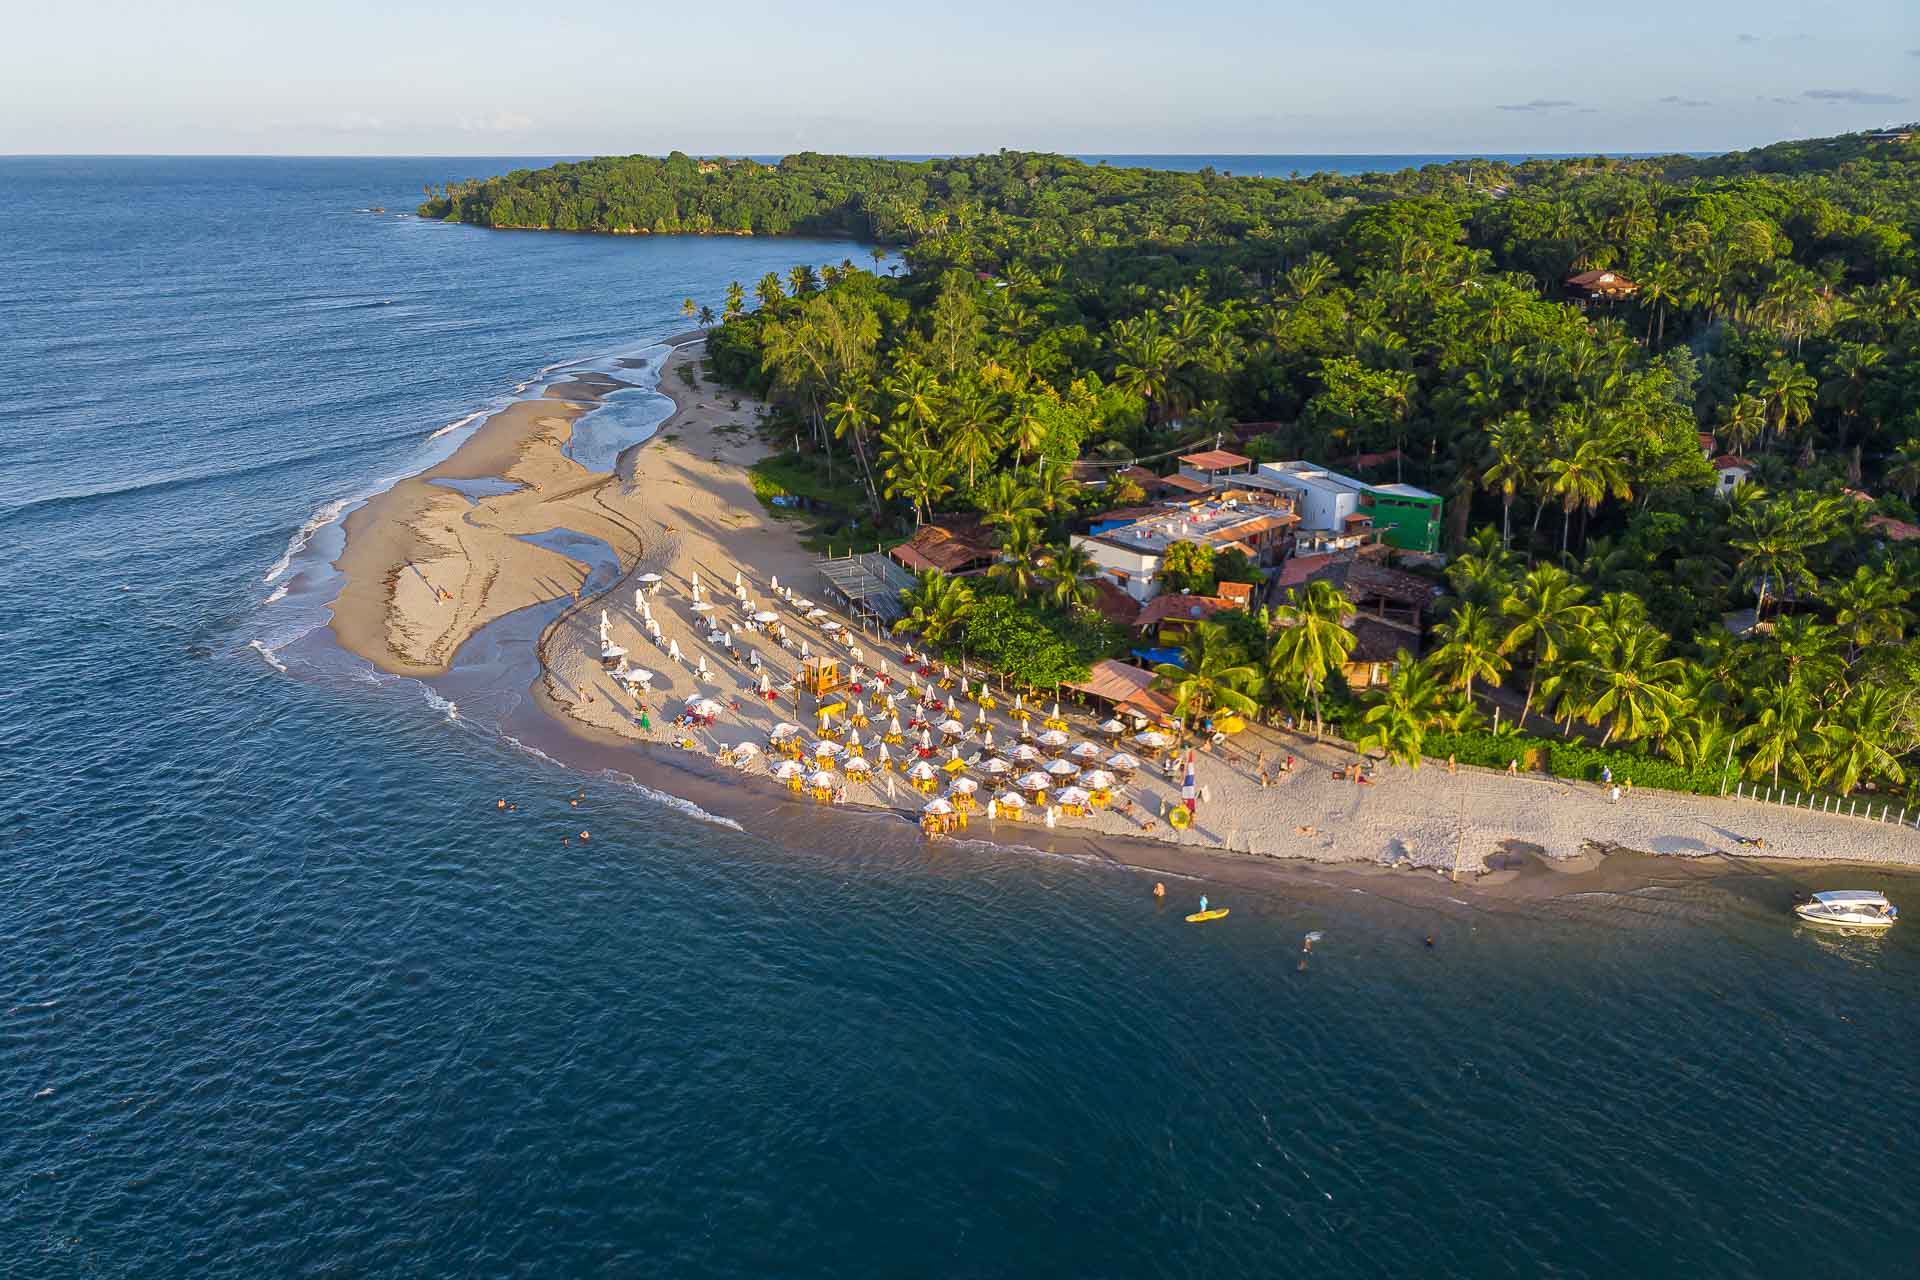 Vista aerea da praia da boca da Barra em Boipeba Velha na Bahia